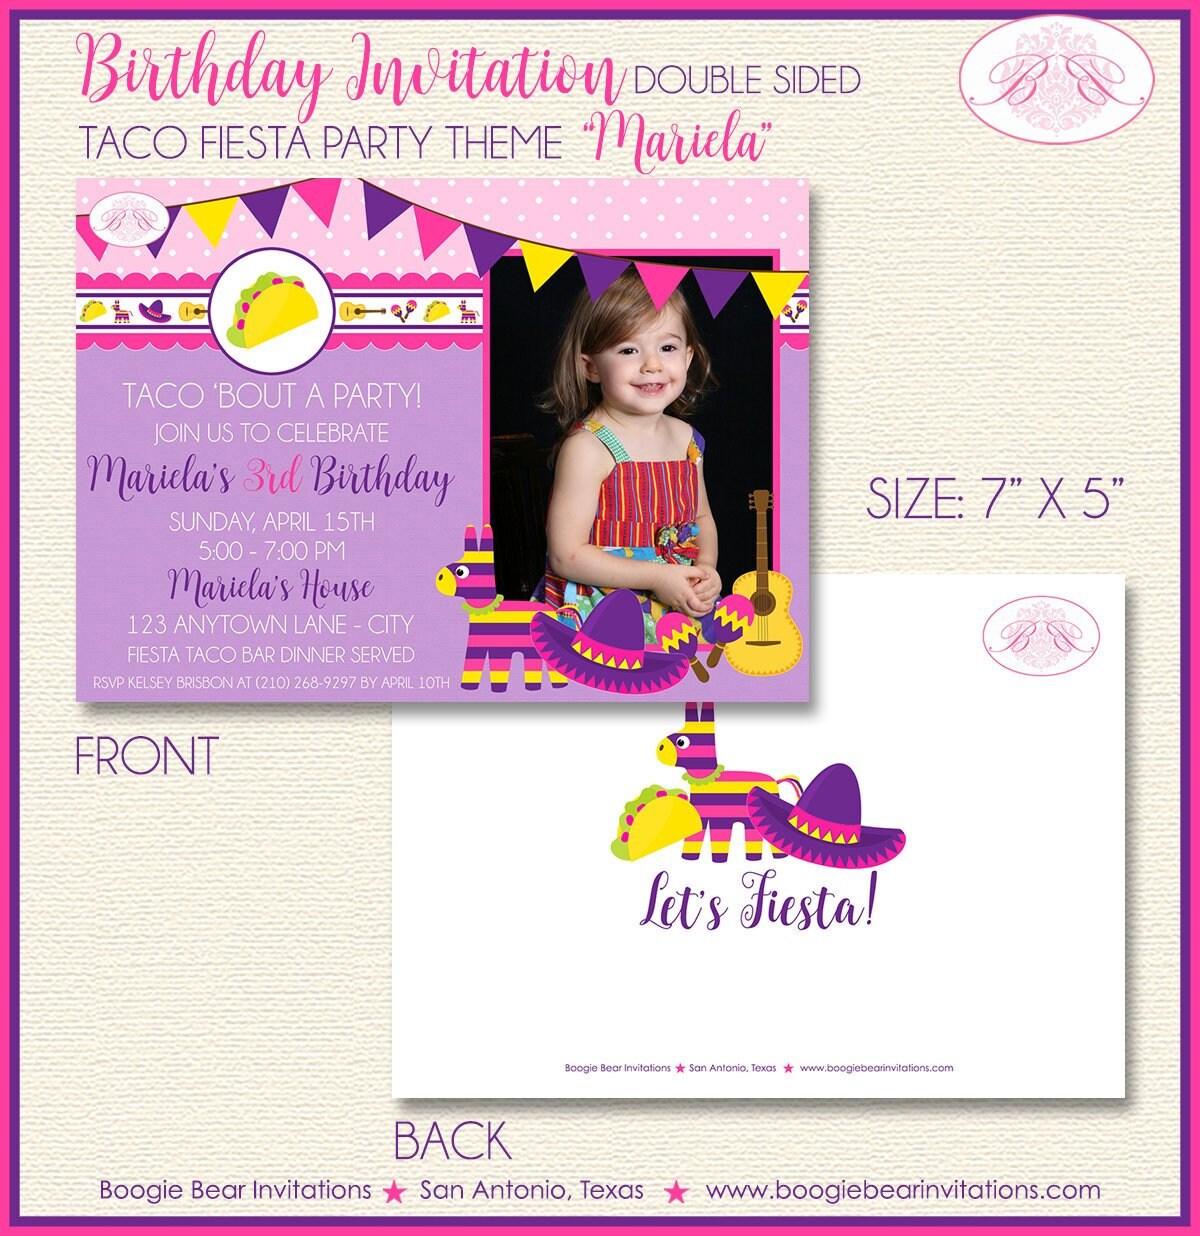 Fiesta Taco Birthday Party Invitation Photo Girl Pink Purple Cinco de Mayo Boogie Bear Invitations Mariela Theme Paperless Printable Printed